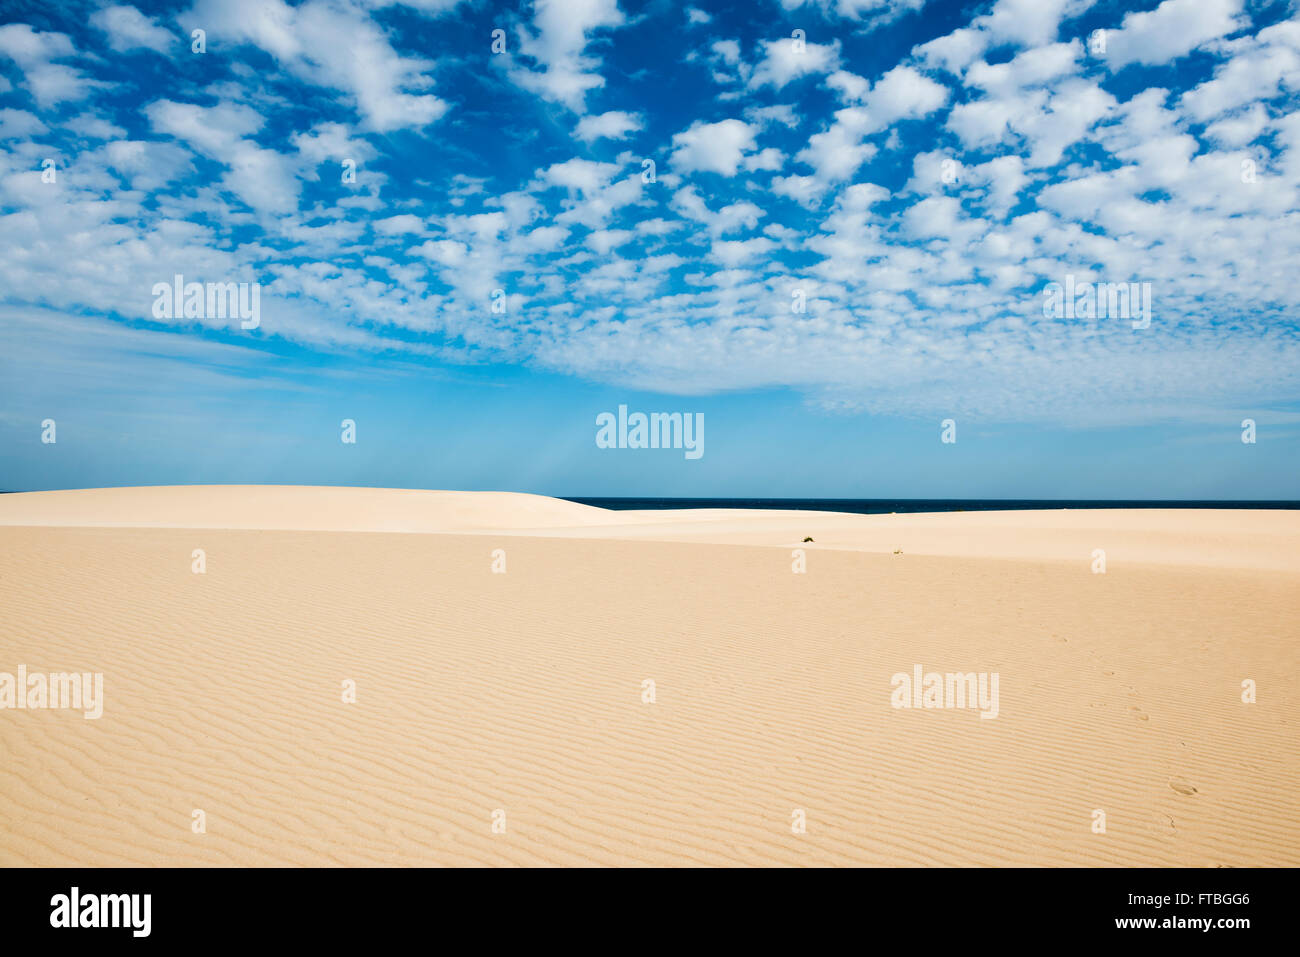 Dunes against blue sea, Corralejo Dunes Natural Park, Corralejo, Fuerteventura, Canary Islands, Spain Stock Photo